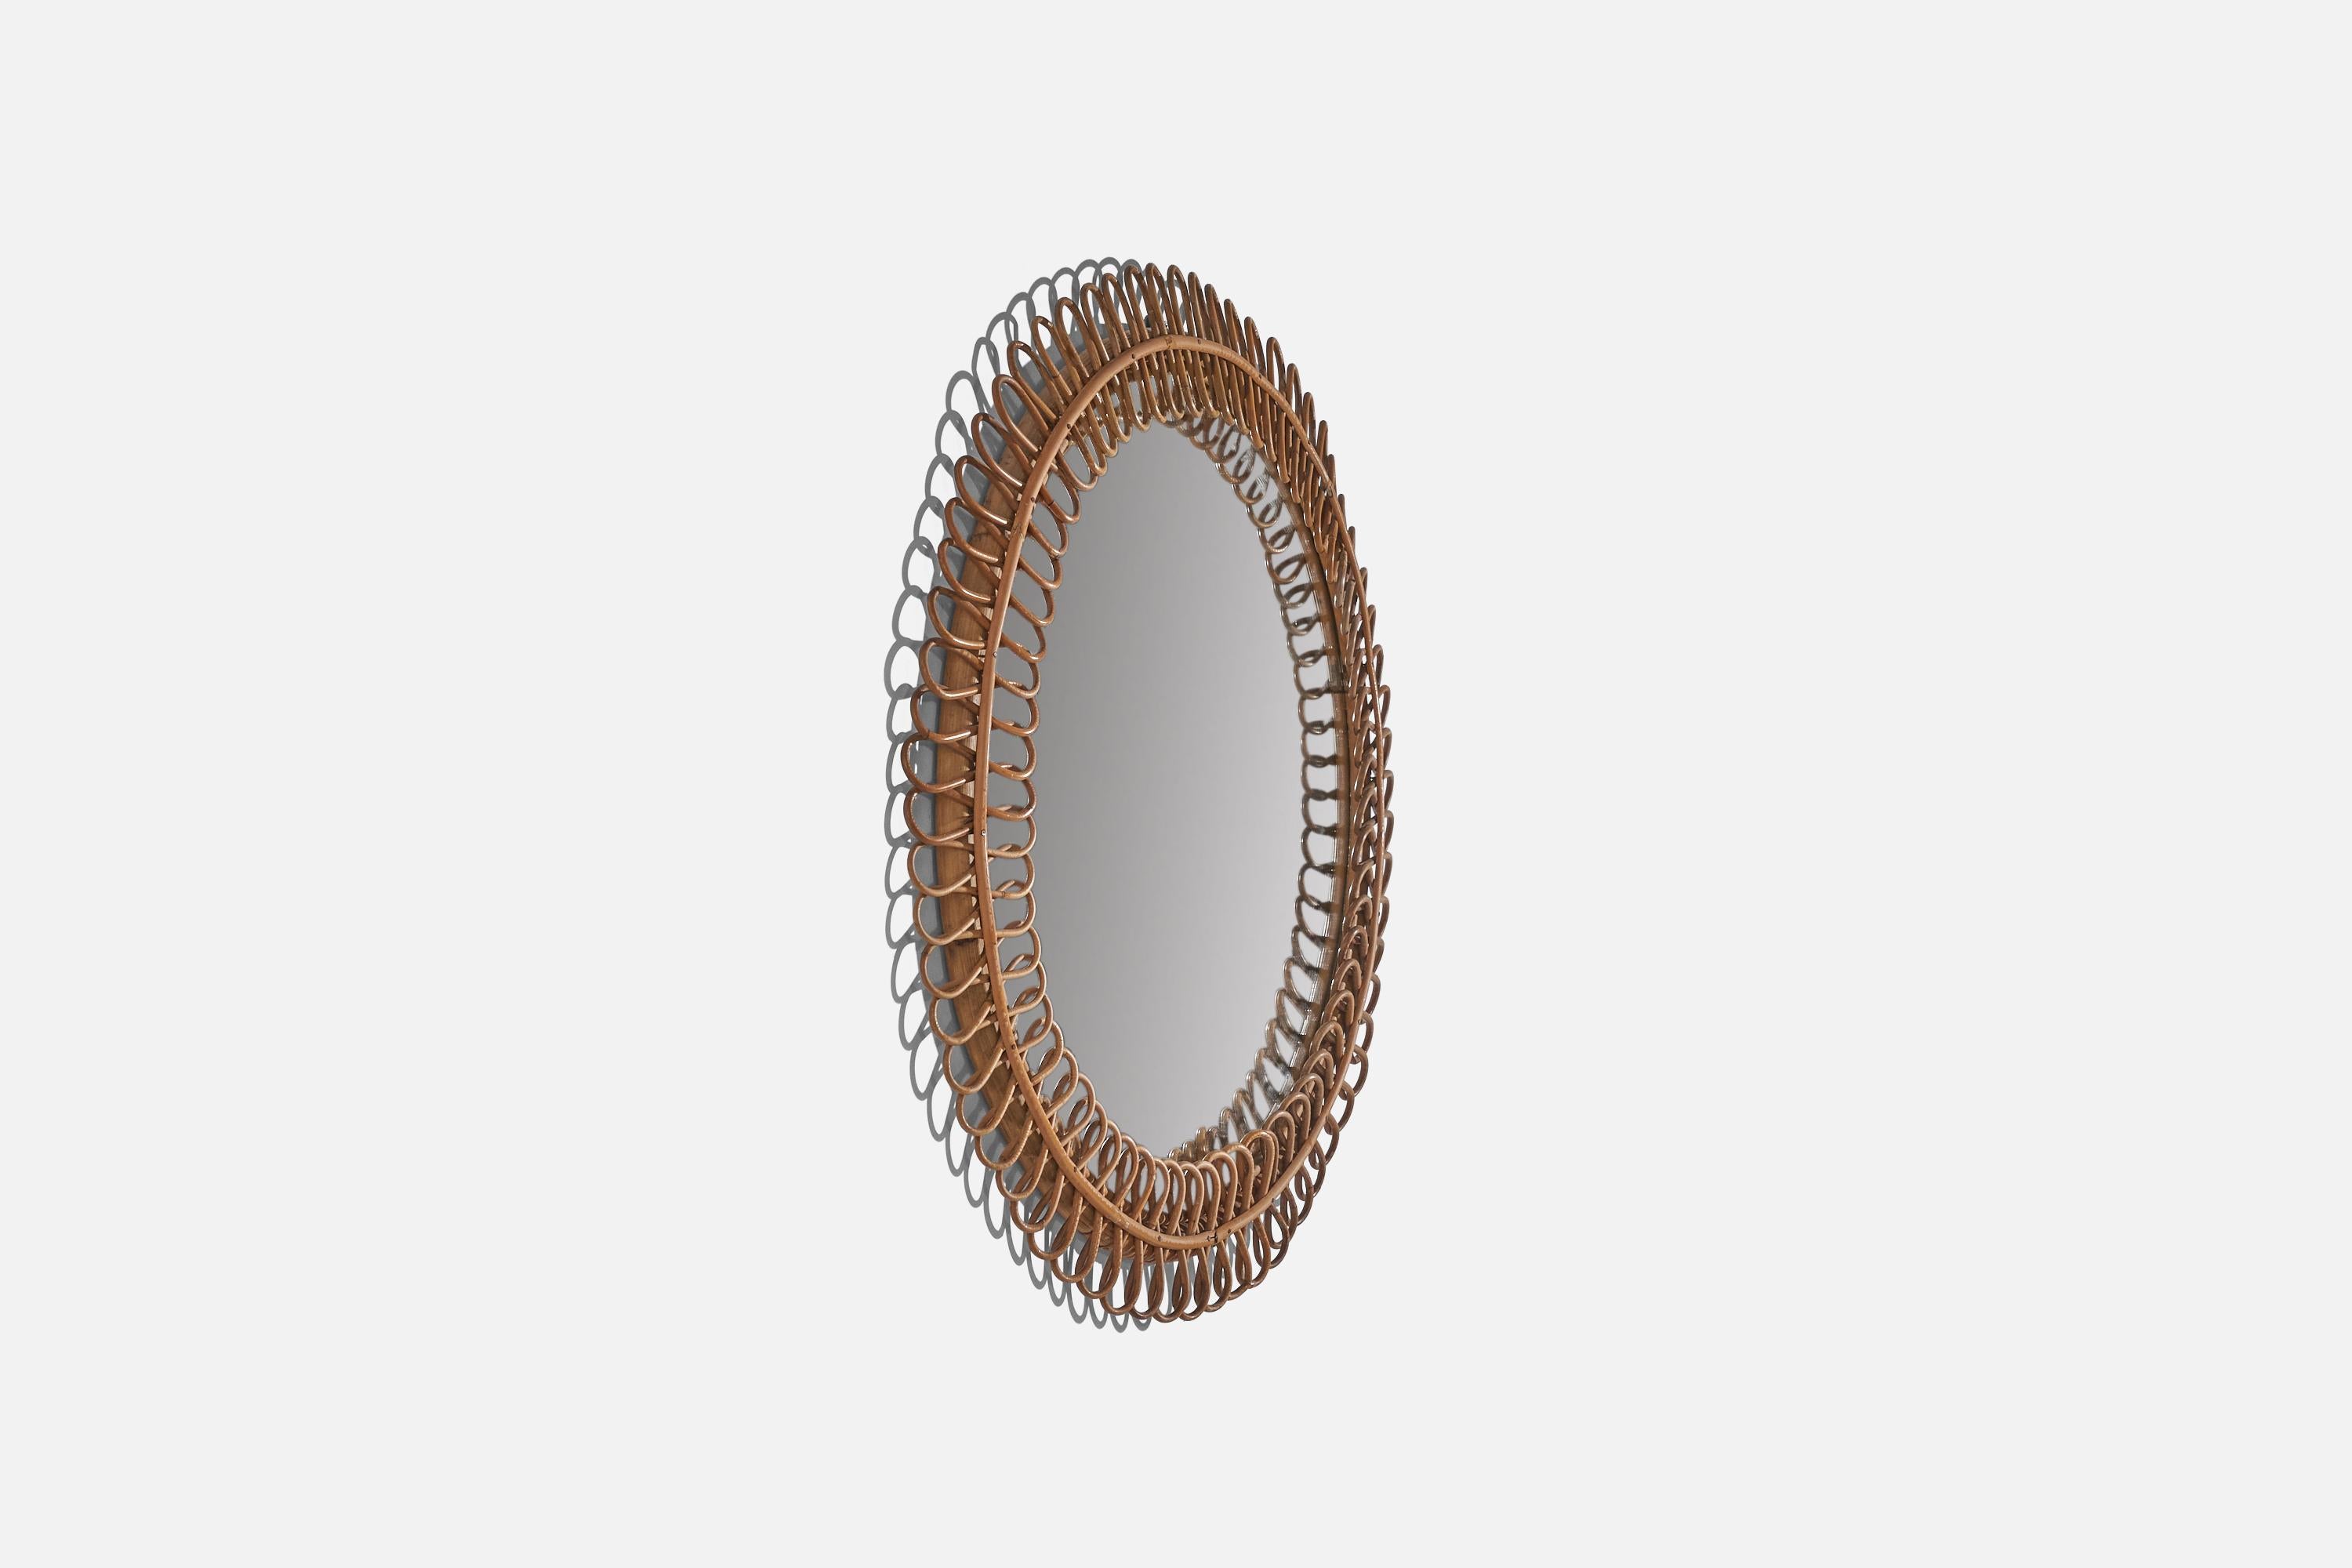 Mid-20th Century Italian Designer, Circular Wall Mirror, Rattan, Mirror Glass, Italy, c. 1950s For Sale